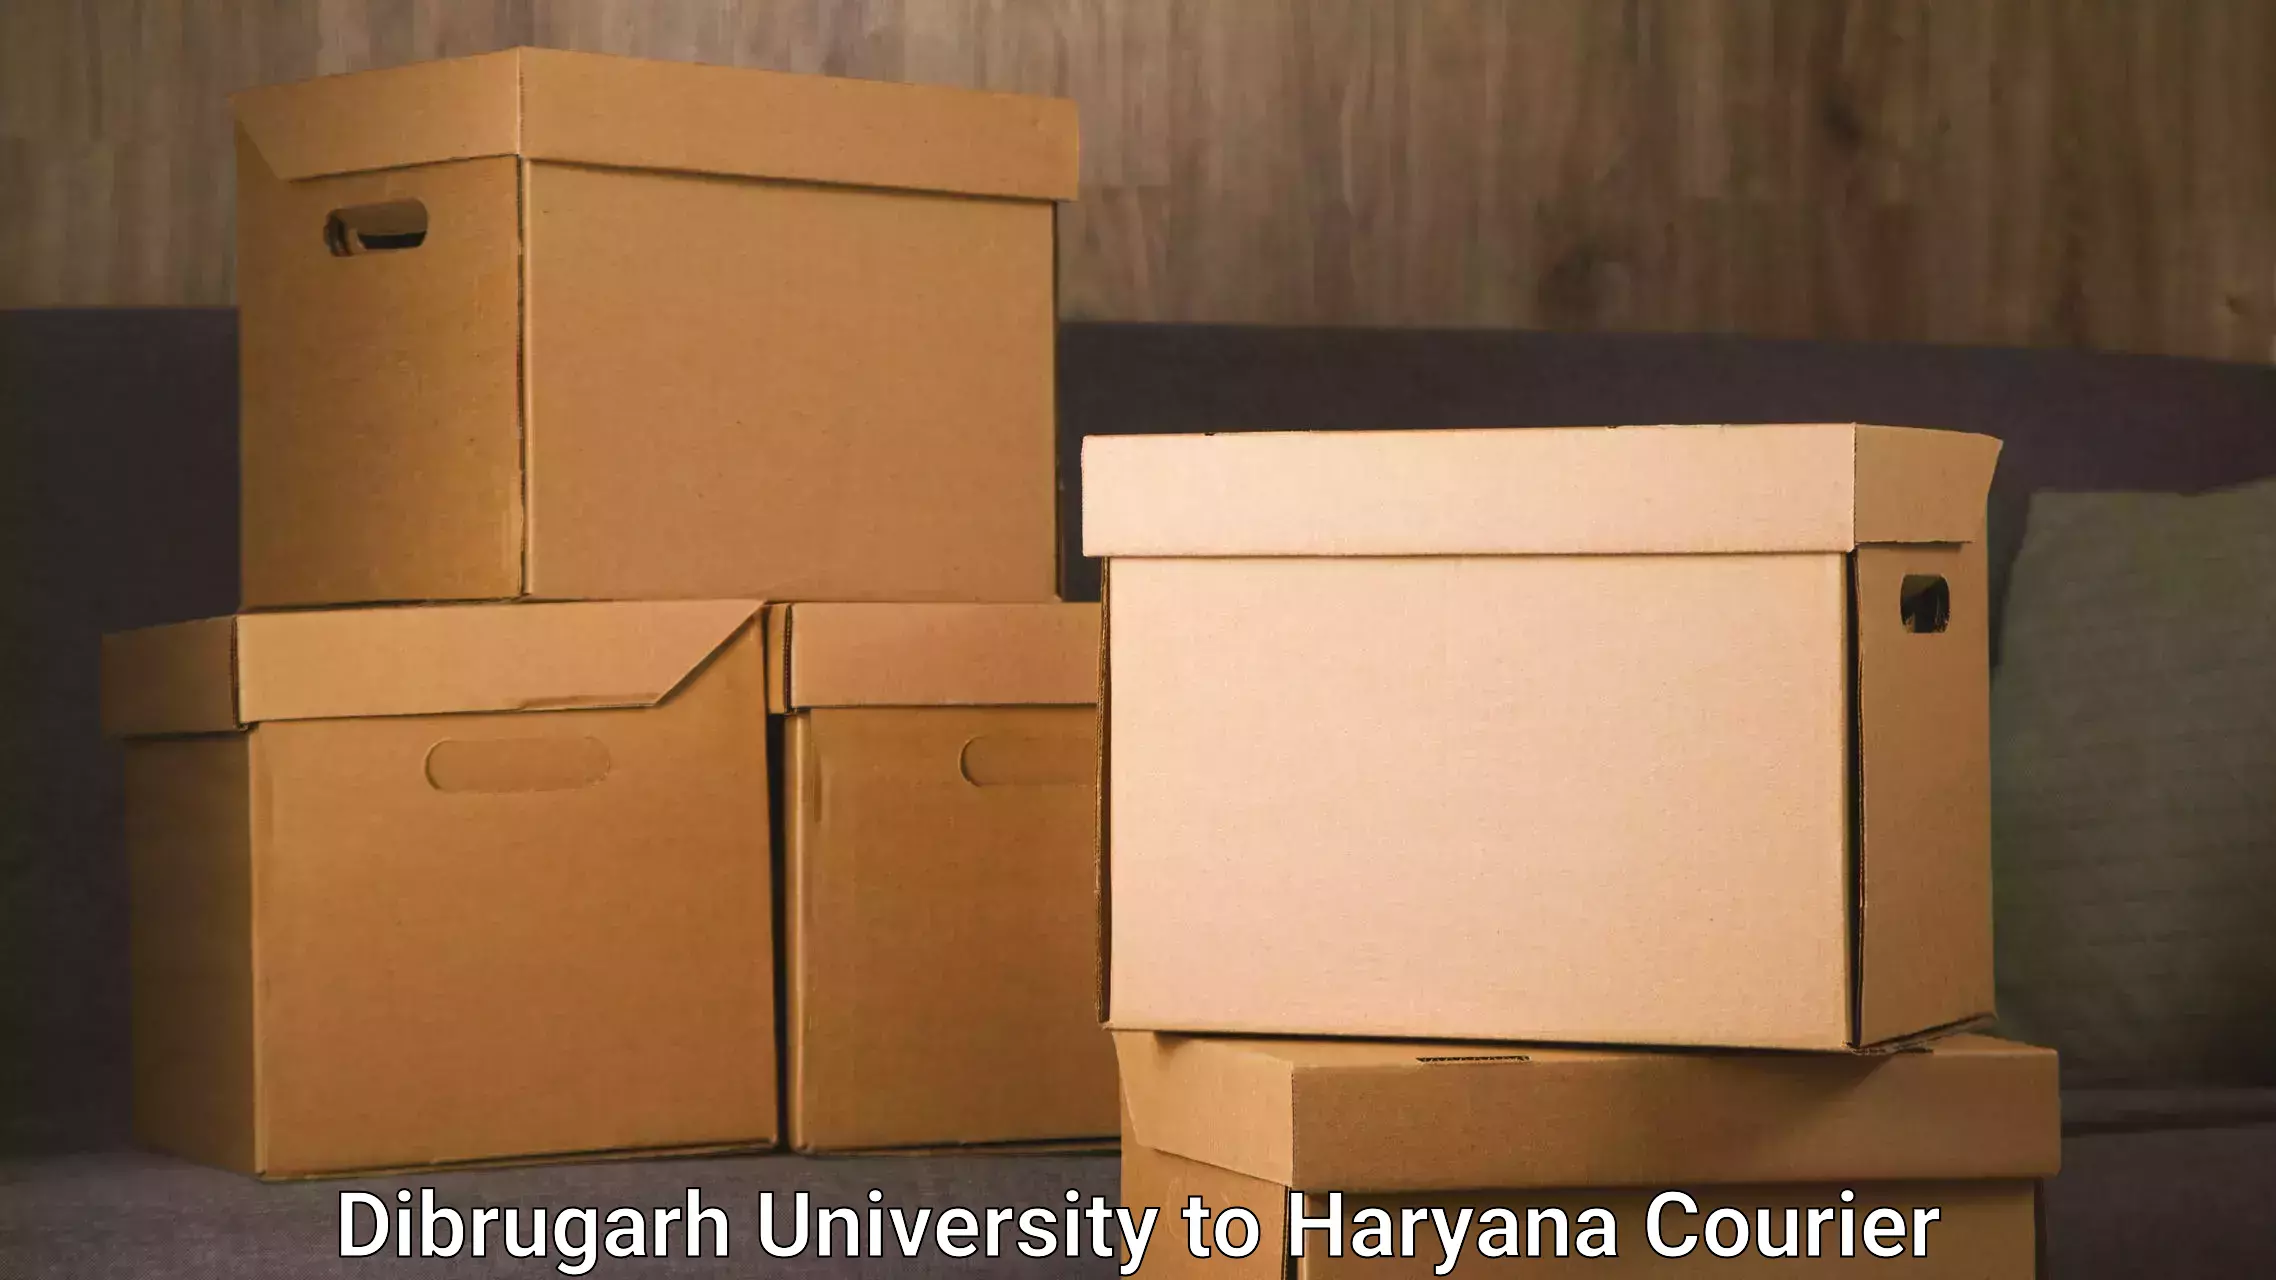 Efficient freight service Dibrugarh University to Sonipat